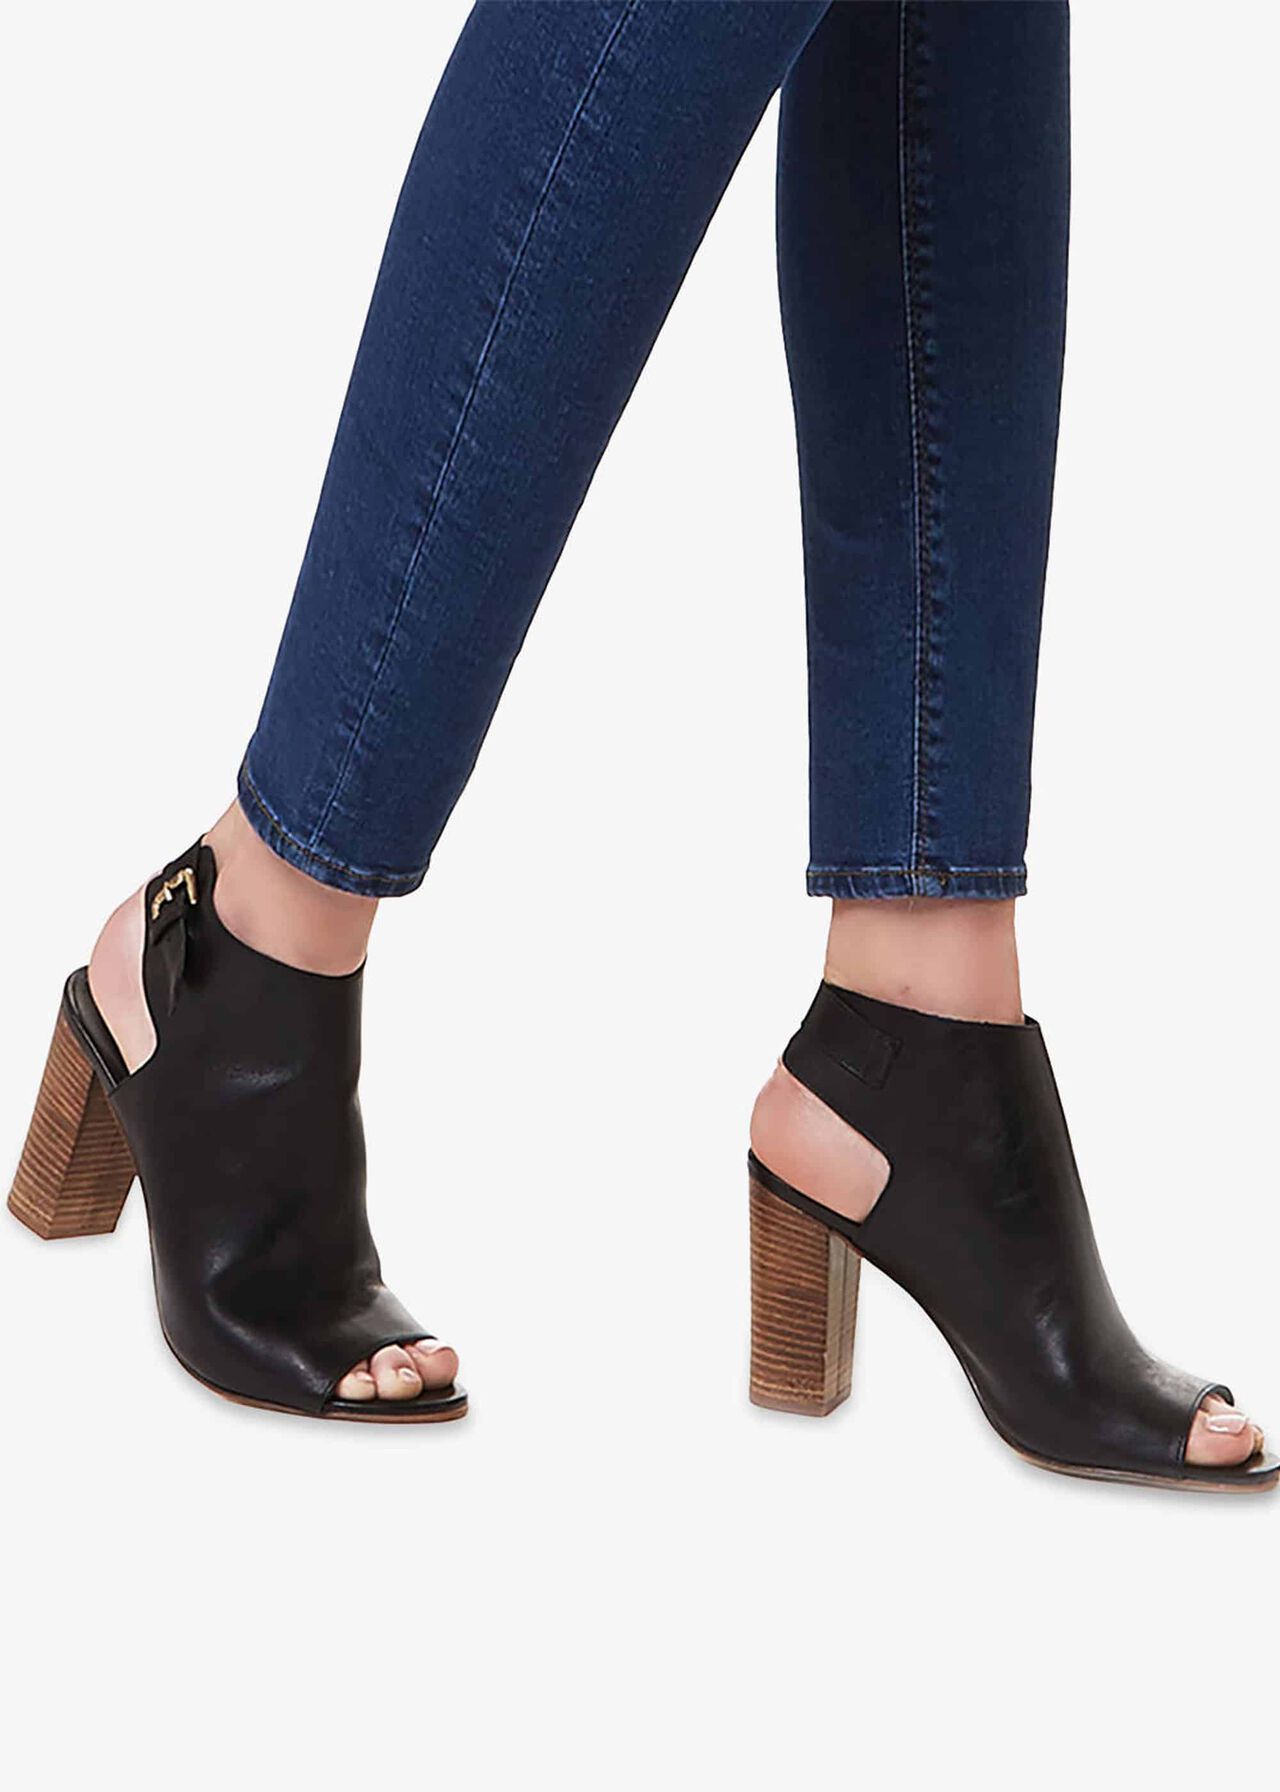 Assent Leather High Heel Open Toe Sandals